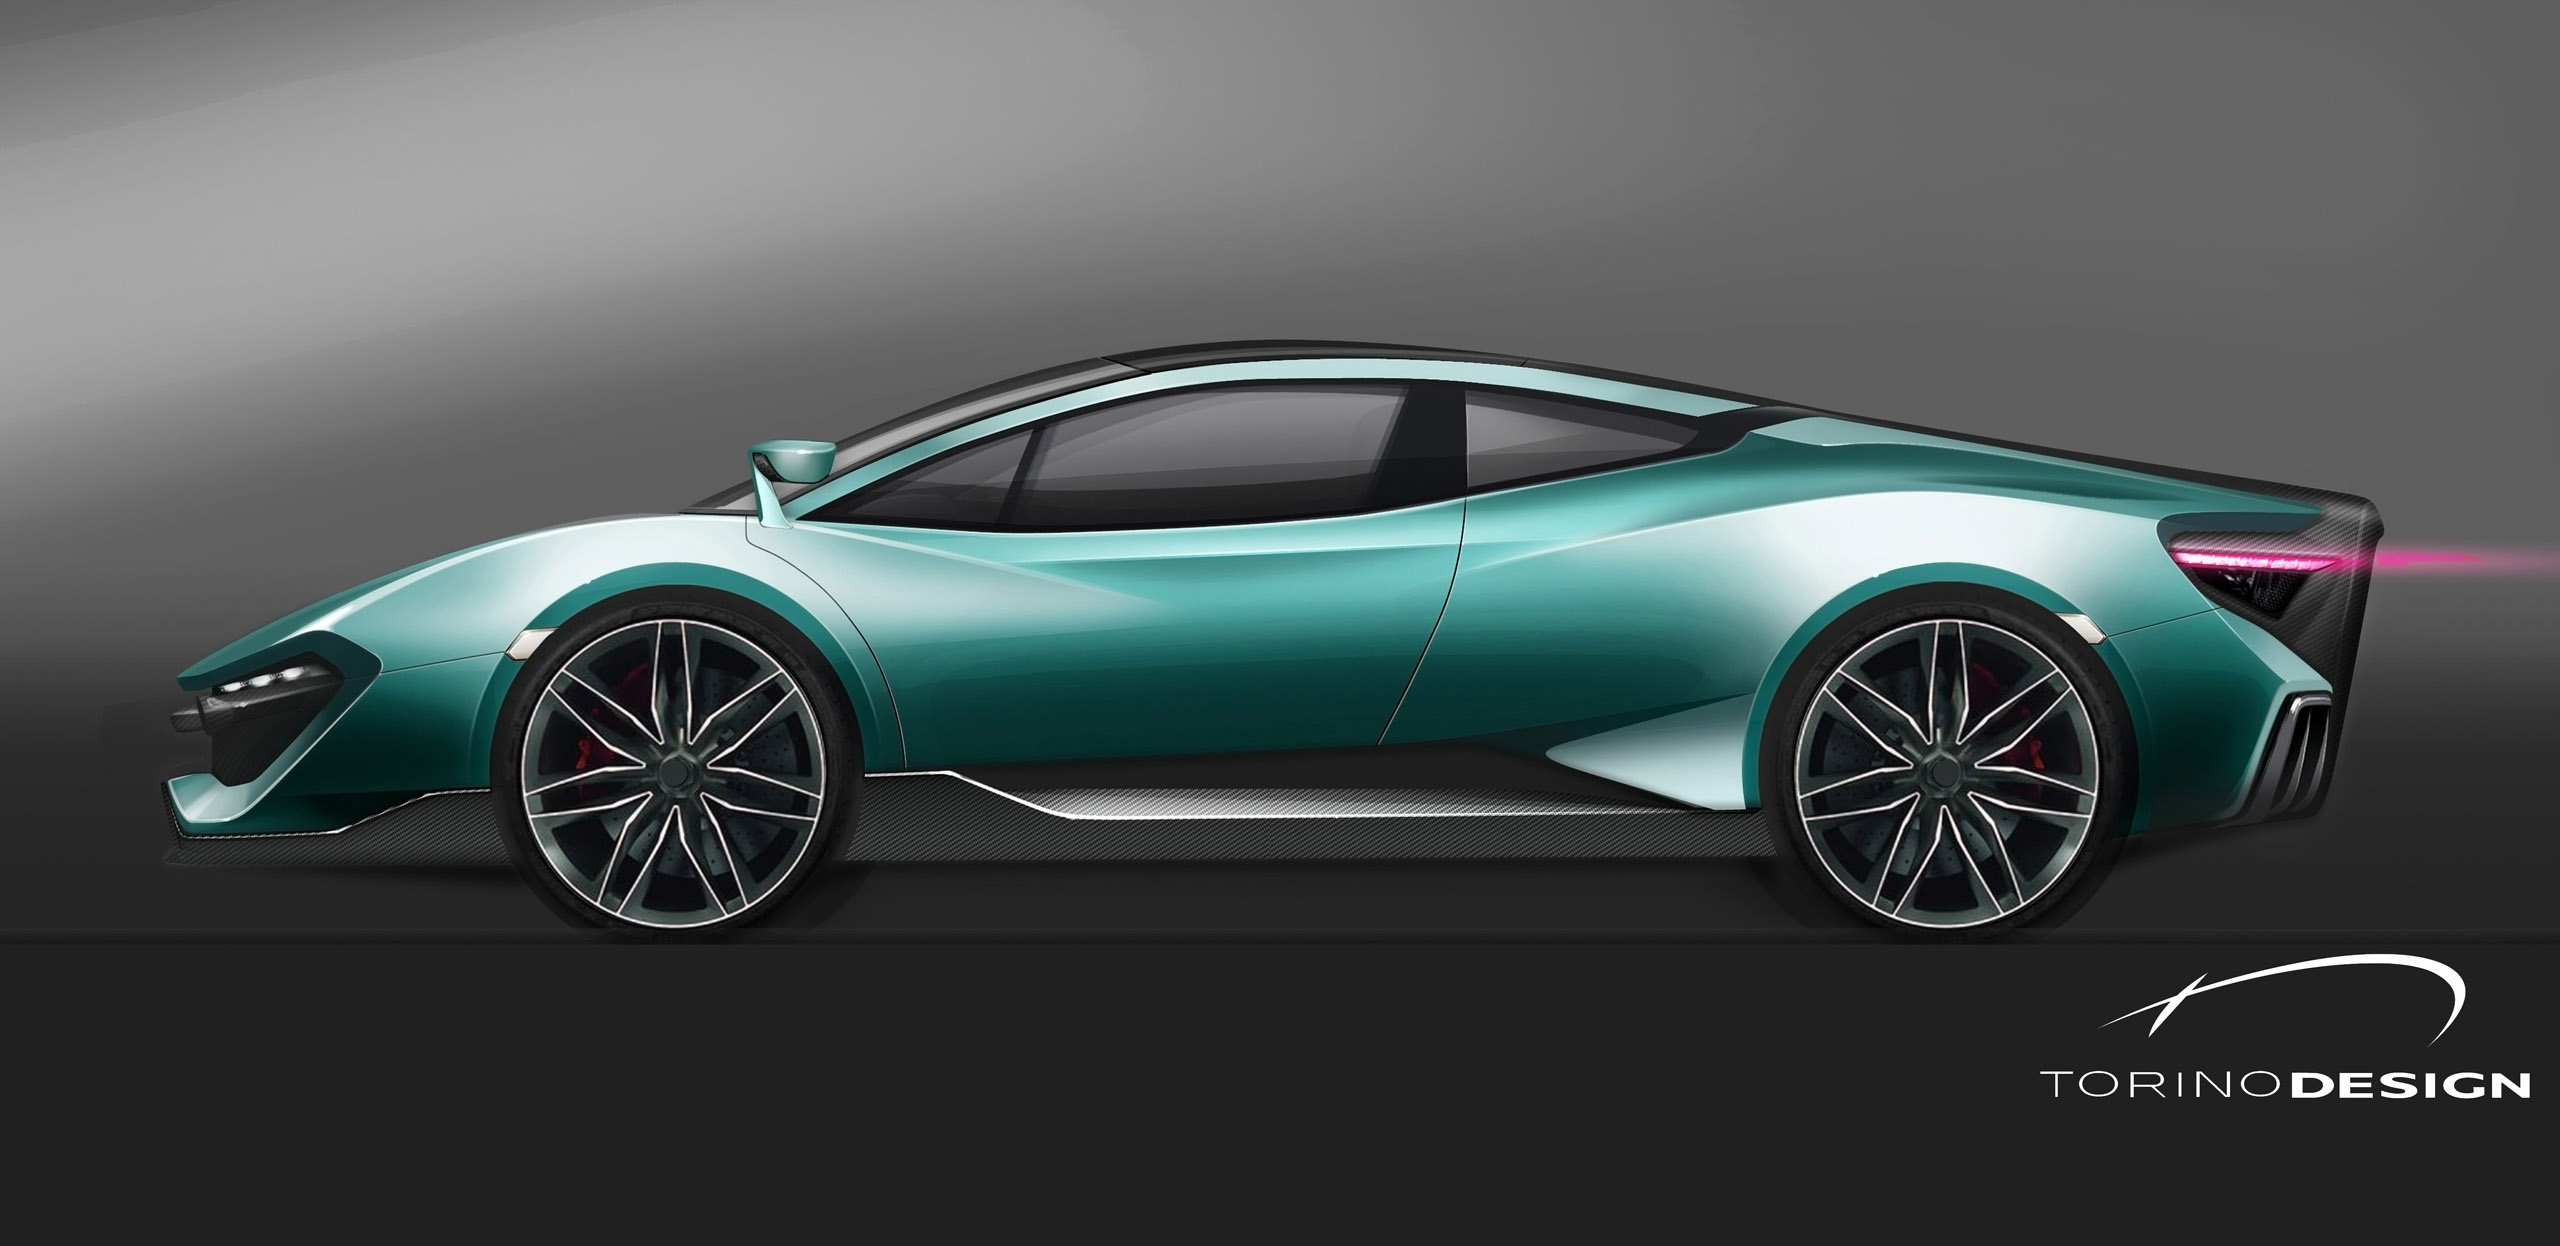 Torino Design ATS Wild Twelve Concept